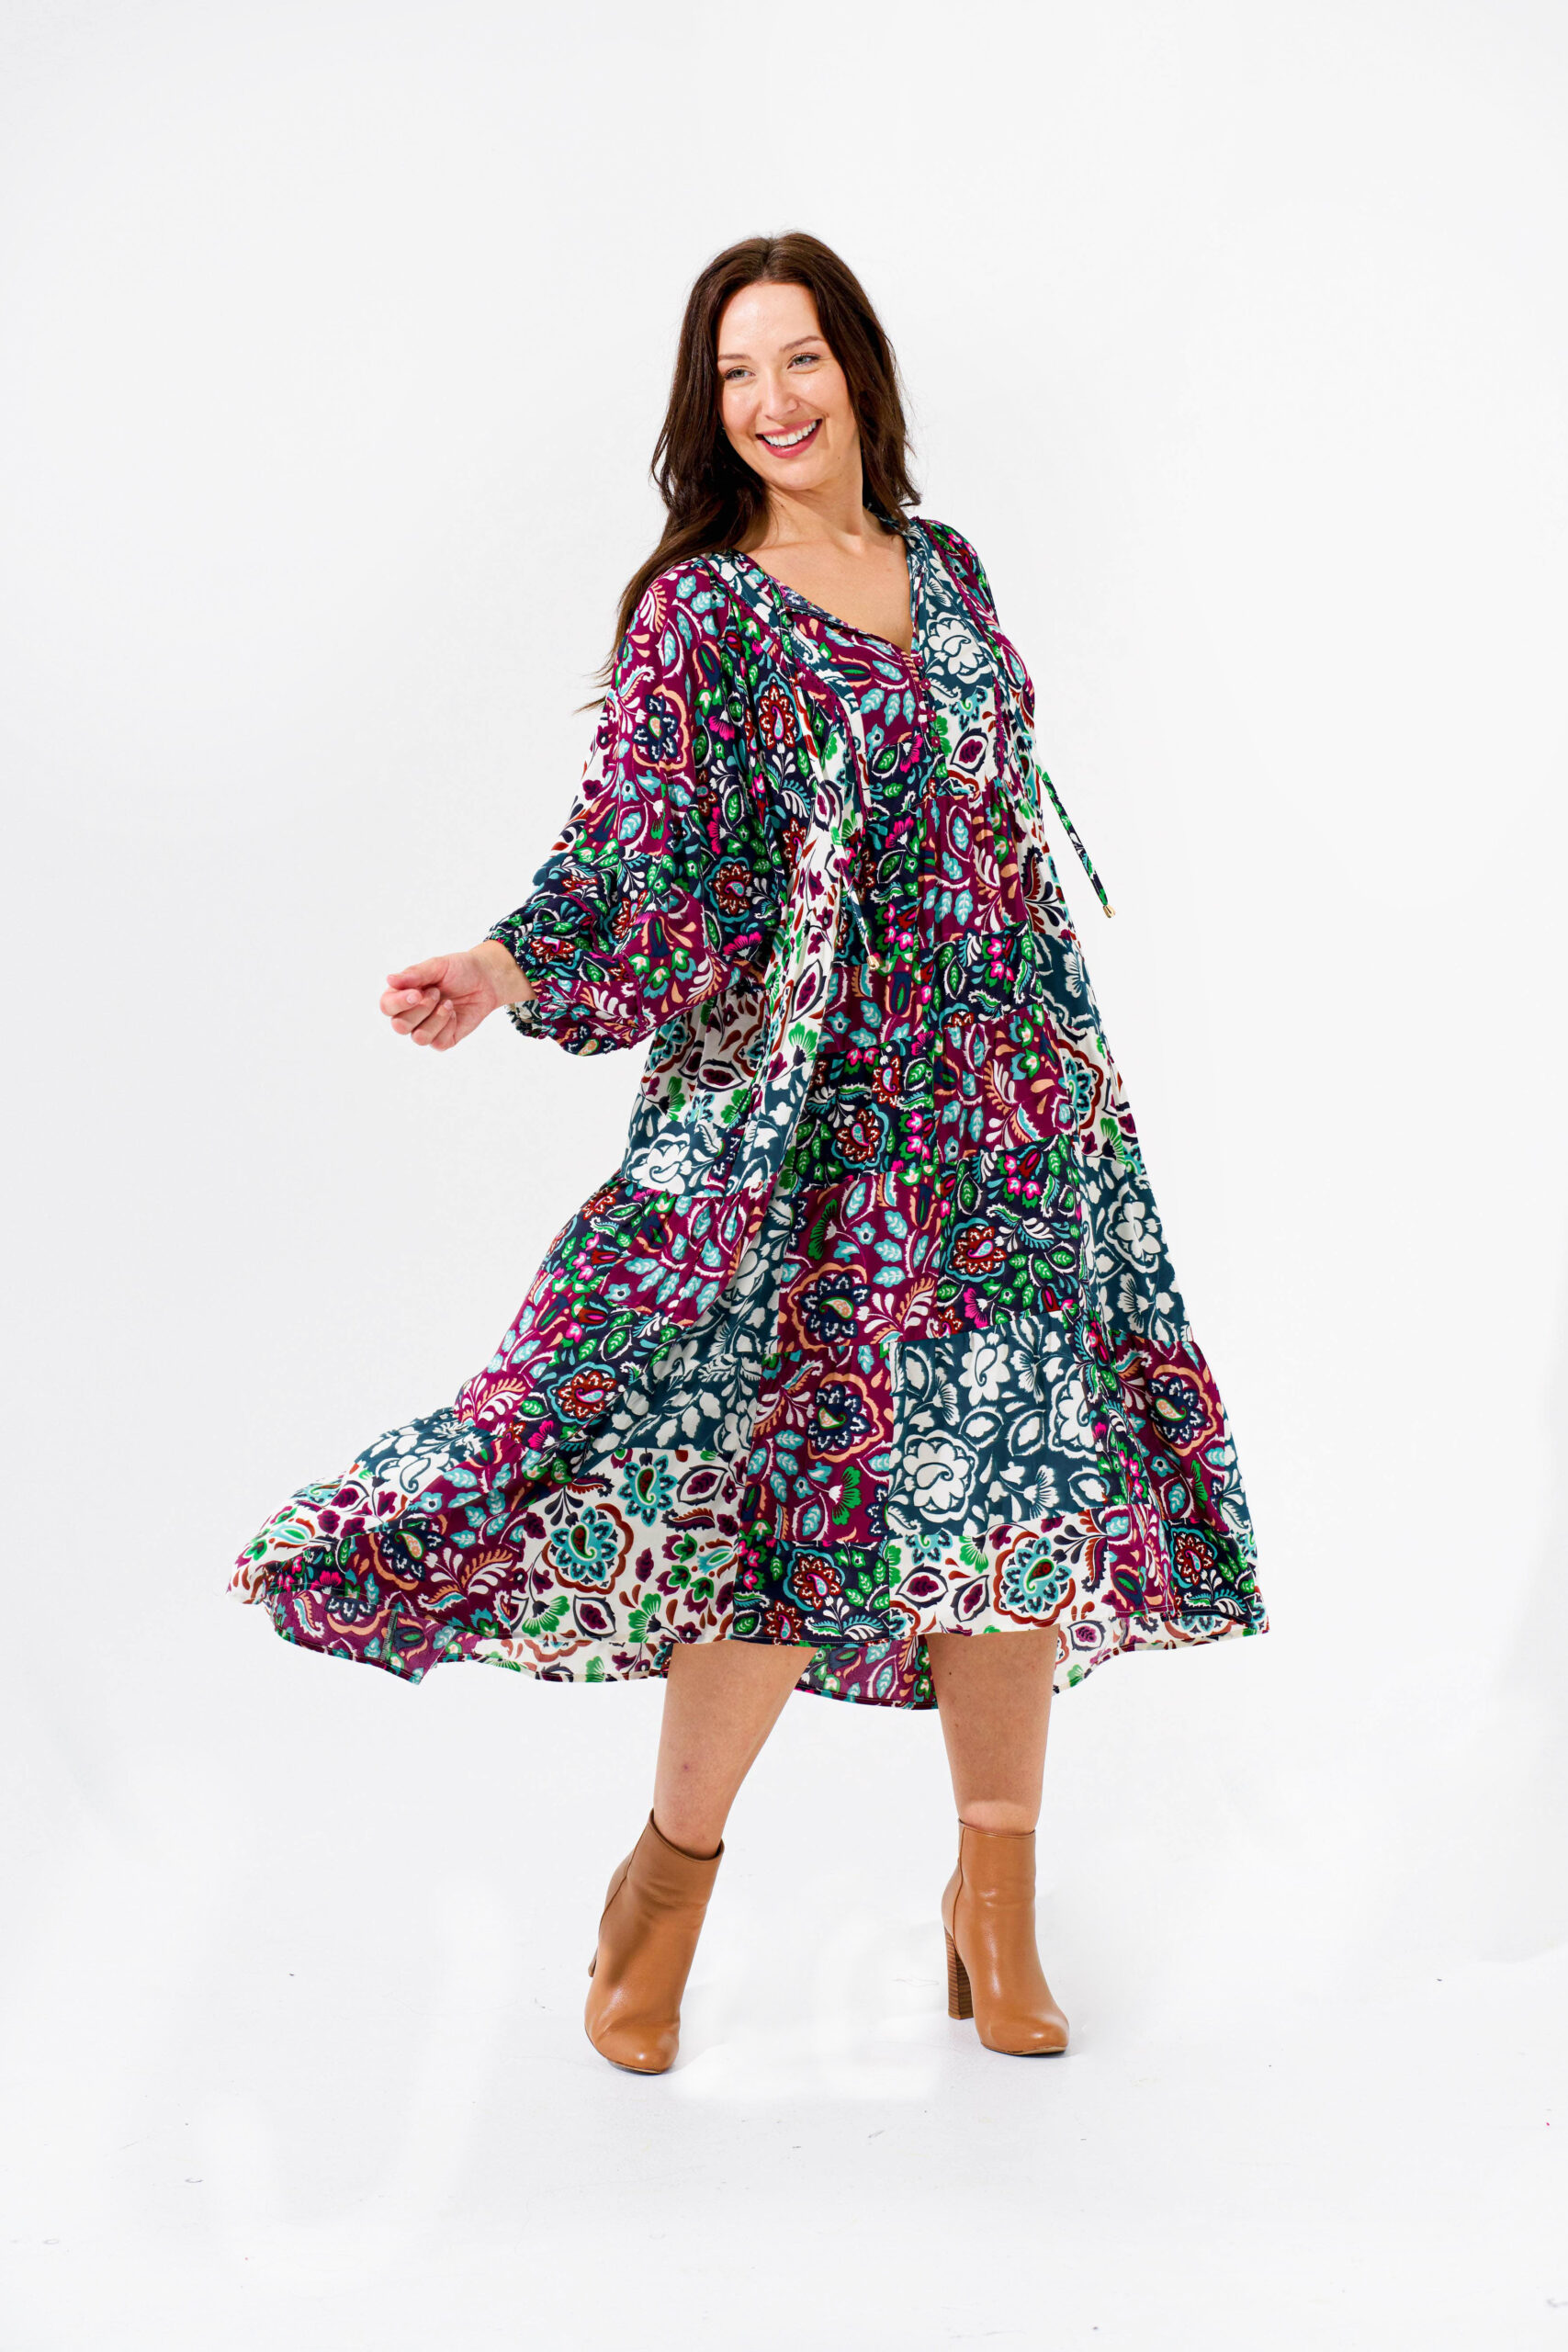 Boho women clothing wholesale dresses - DARCIE DRESS